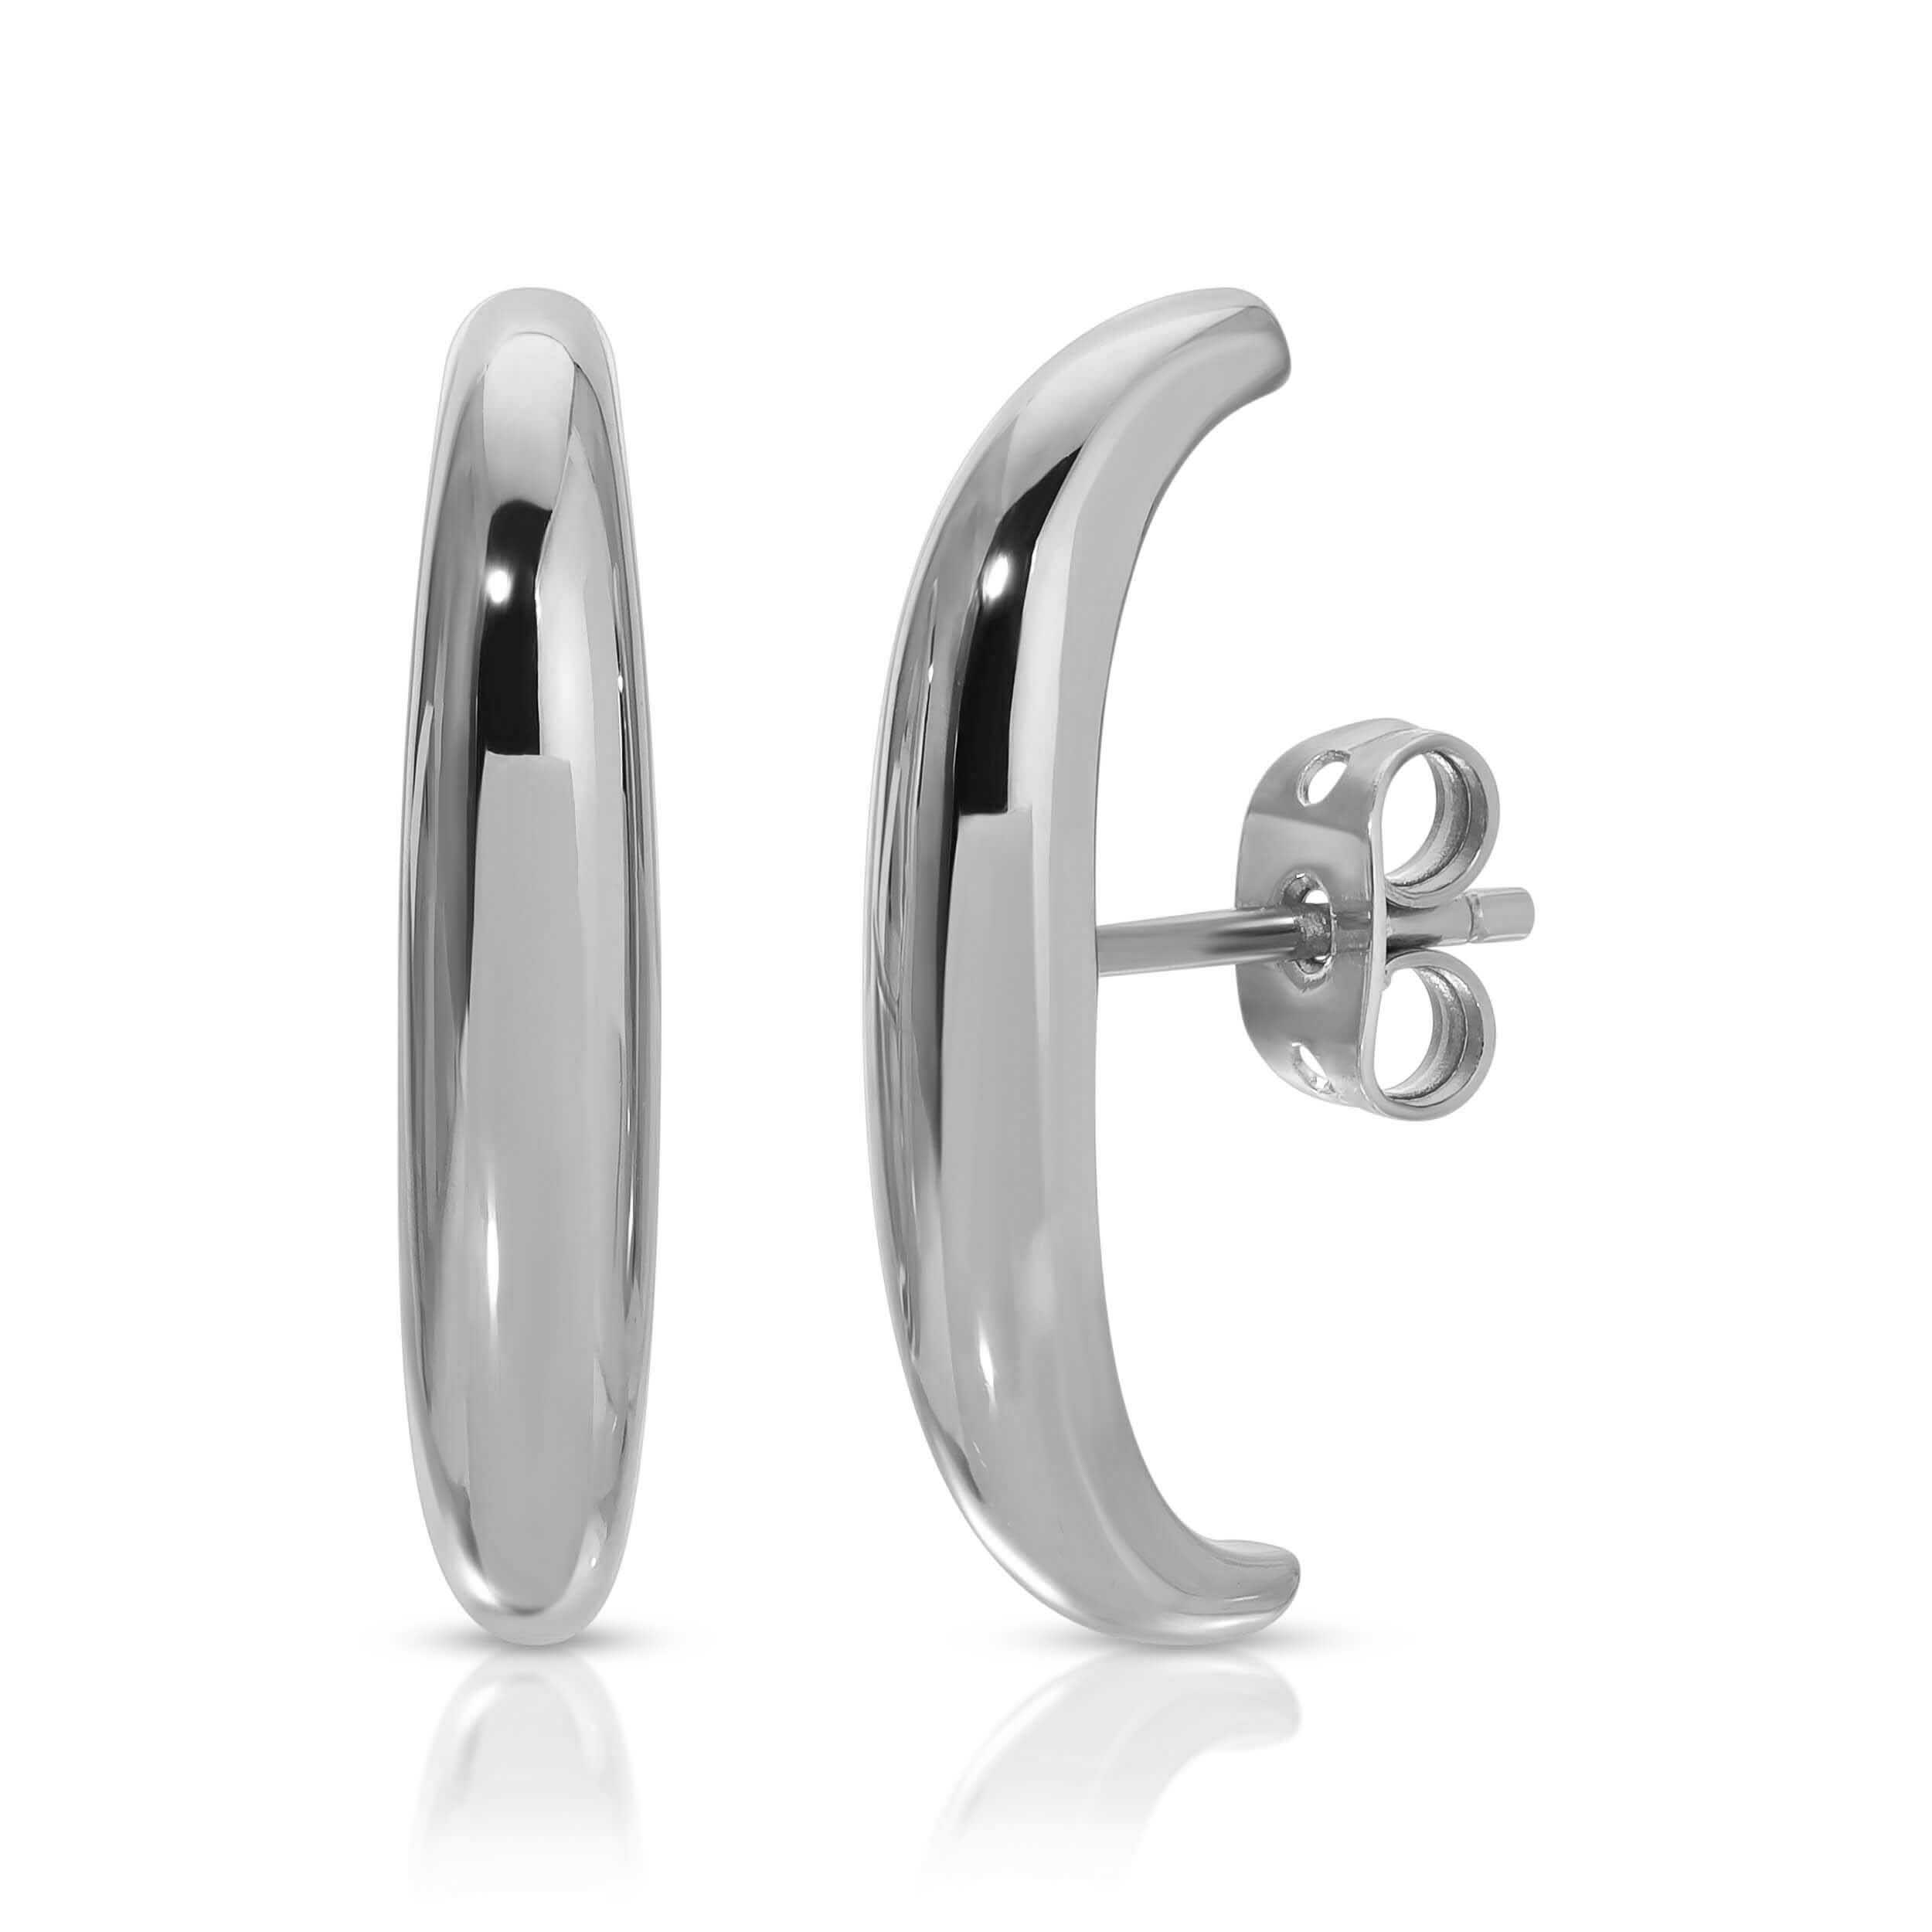 Quality Australian Solid Silver 925 BULK Earring Hooks